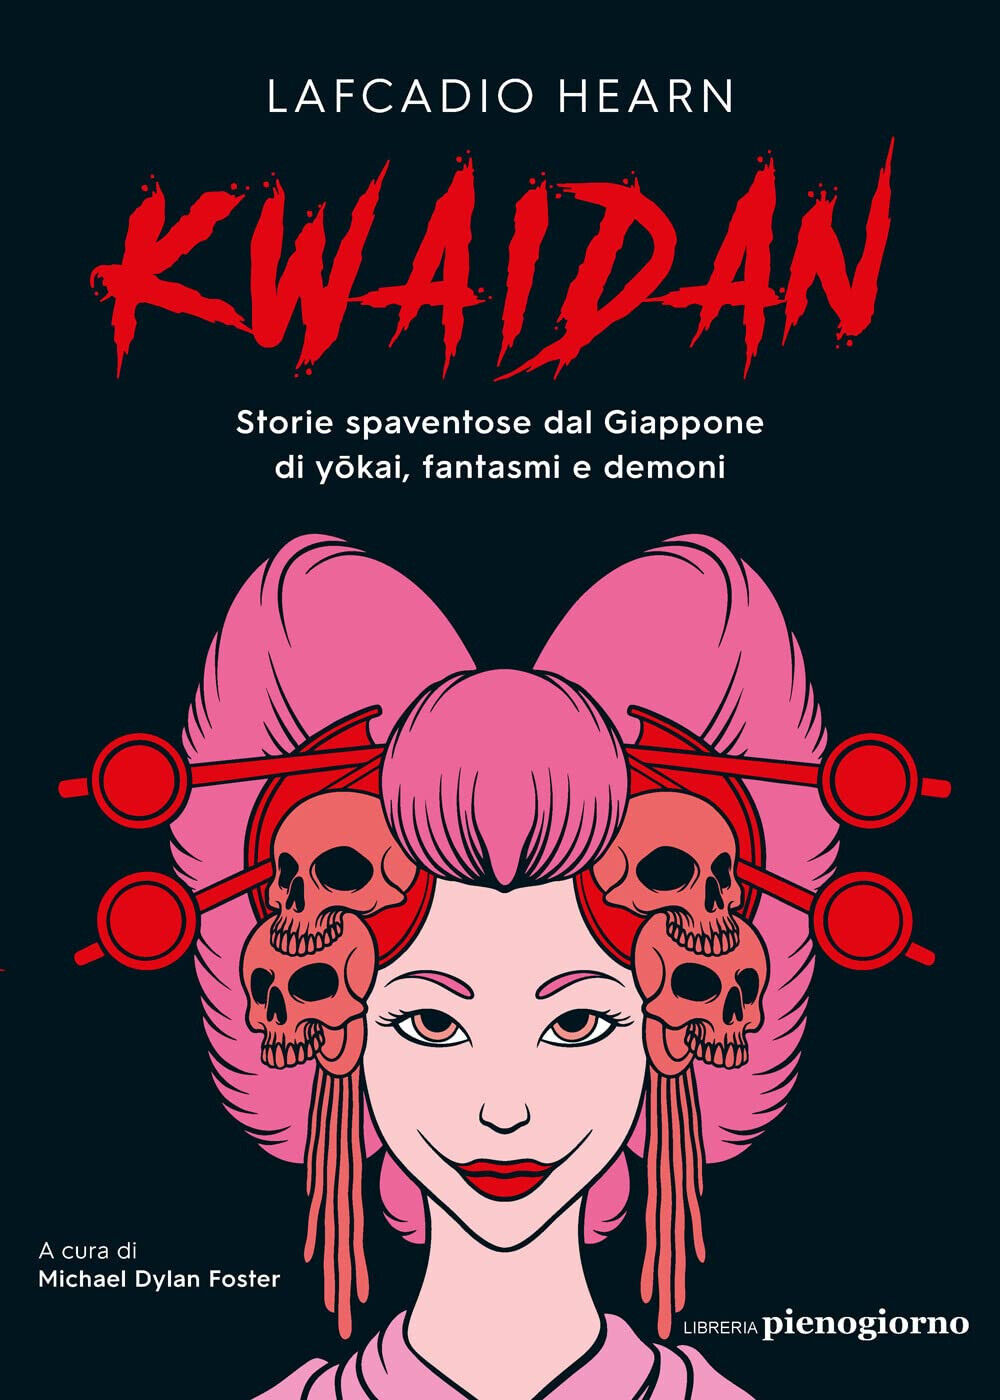 Kwaidan - Lafcadio Hearn - Libreria Pienogiorno, 2022